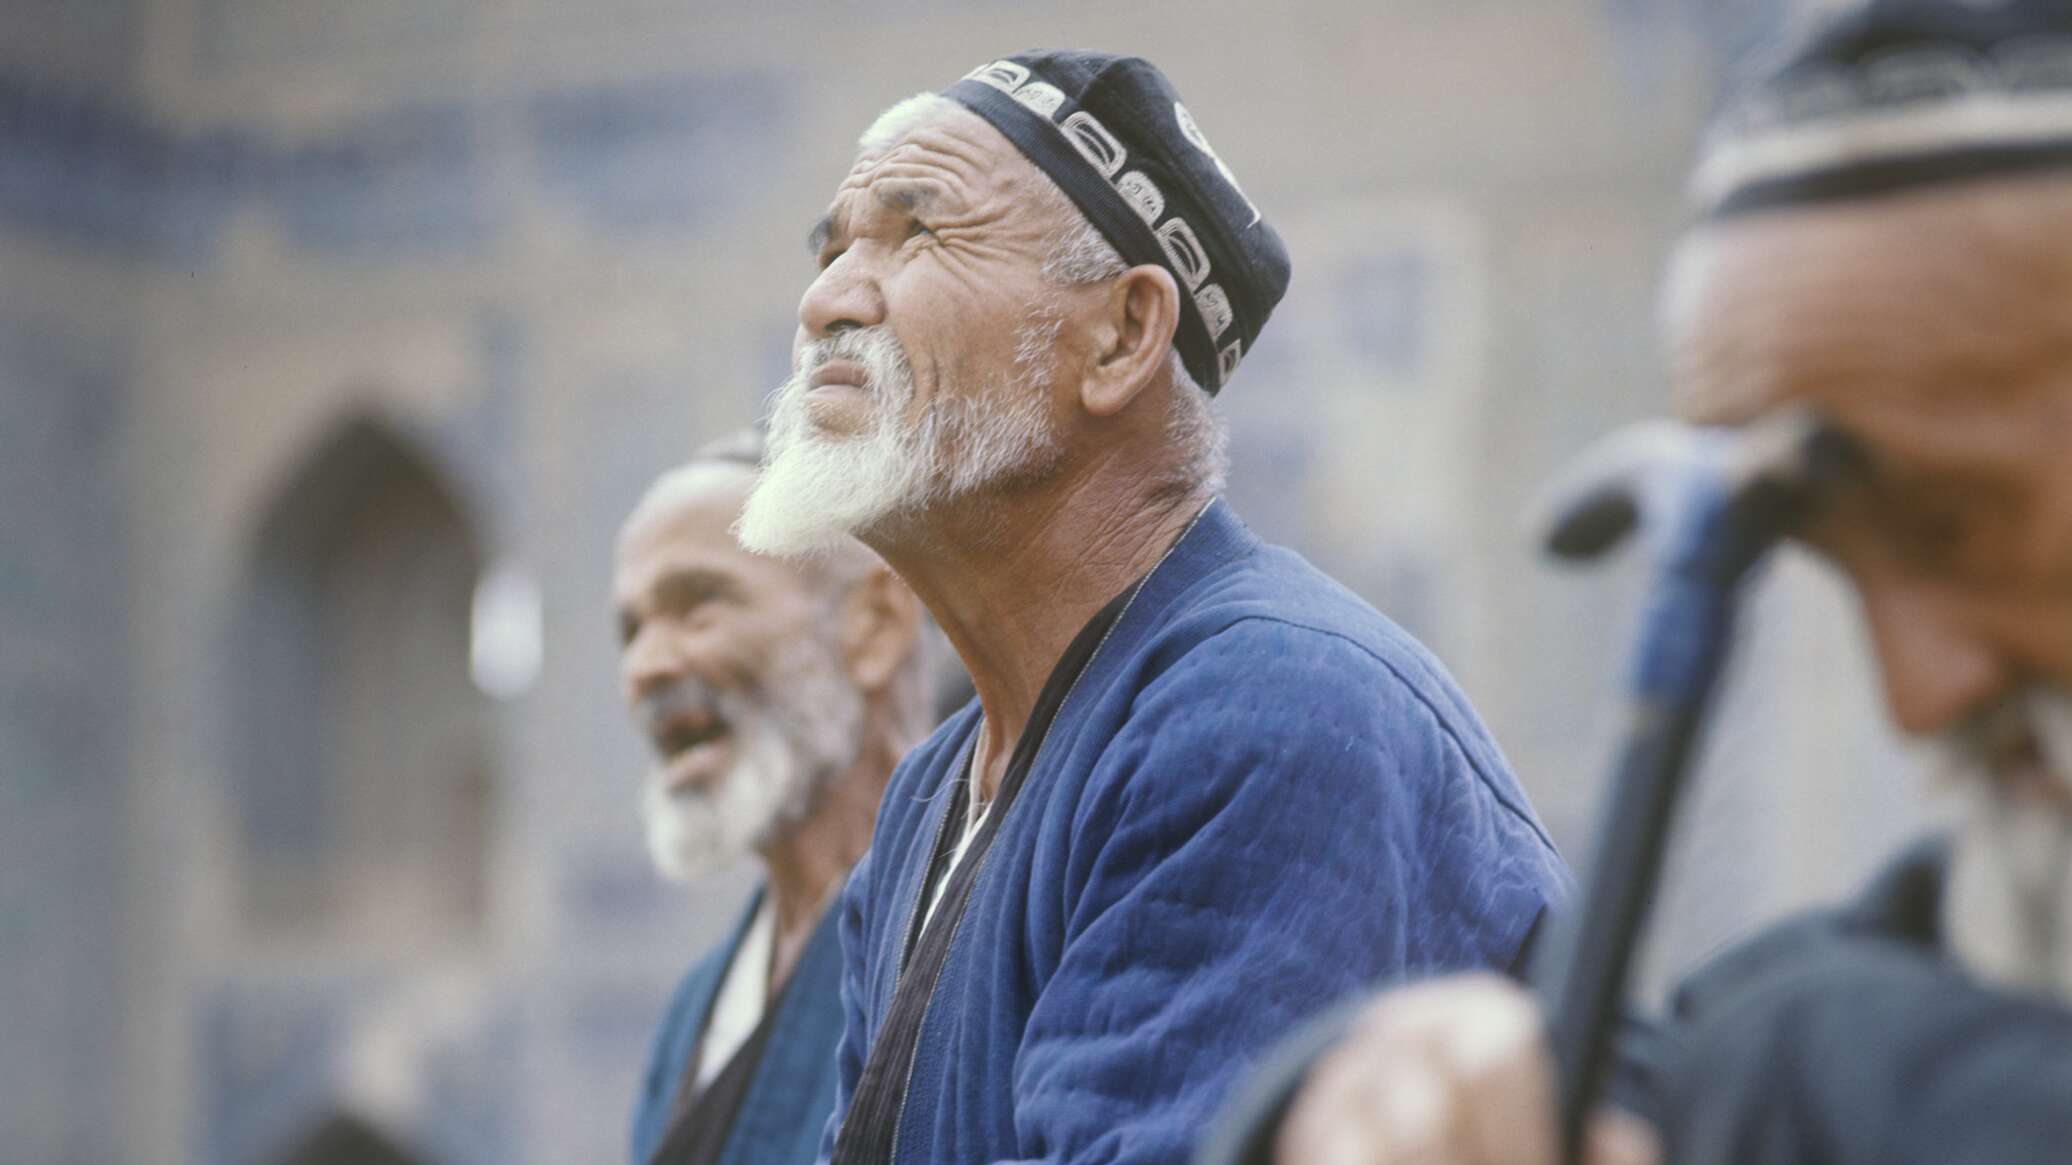 Повышение пенсий в узбекистане